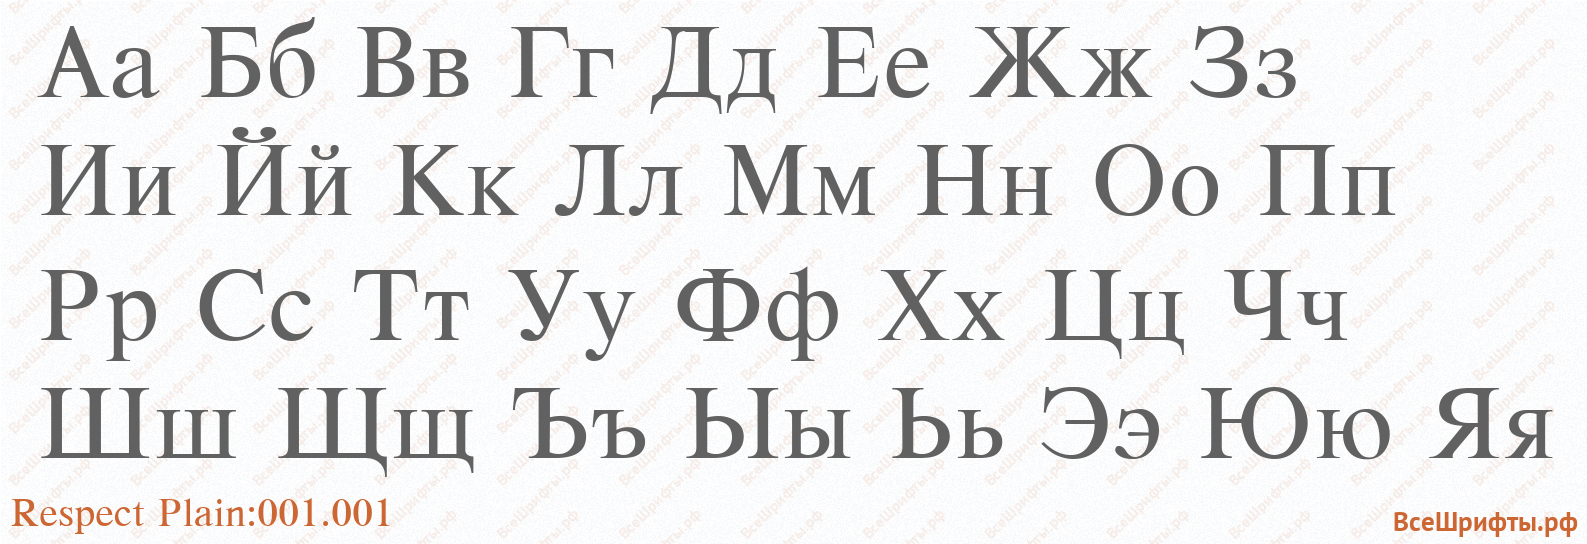 Шрифт Respect Plain:001.001 с русскими буквами